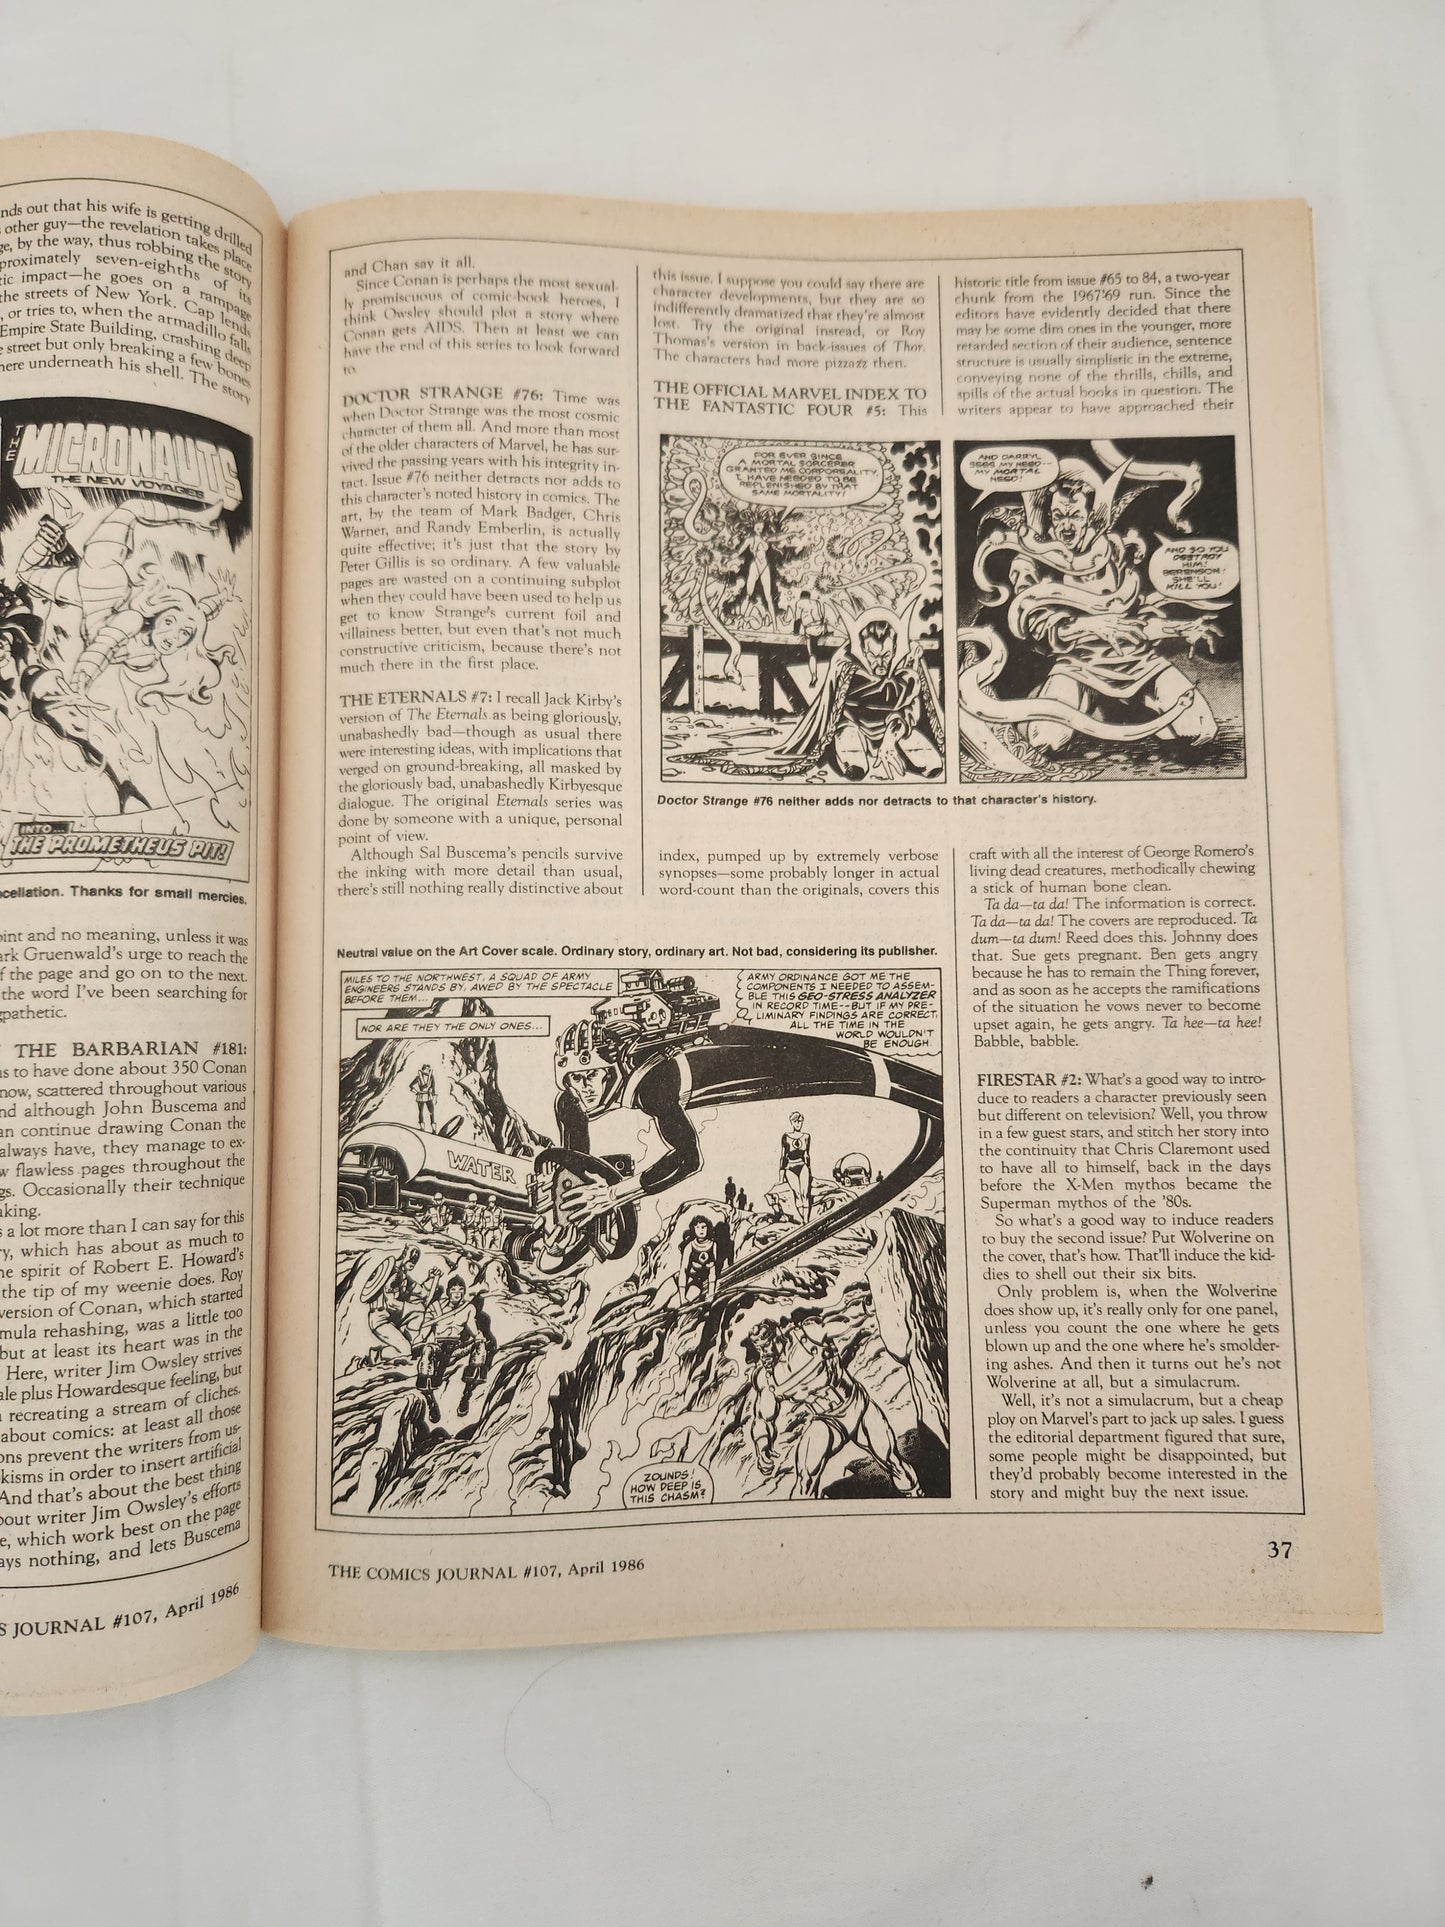 1986 - Comics Journal #107